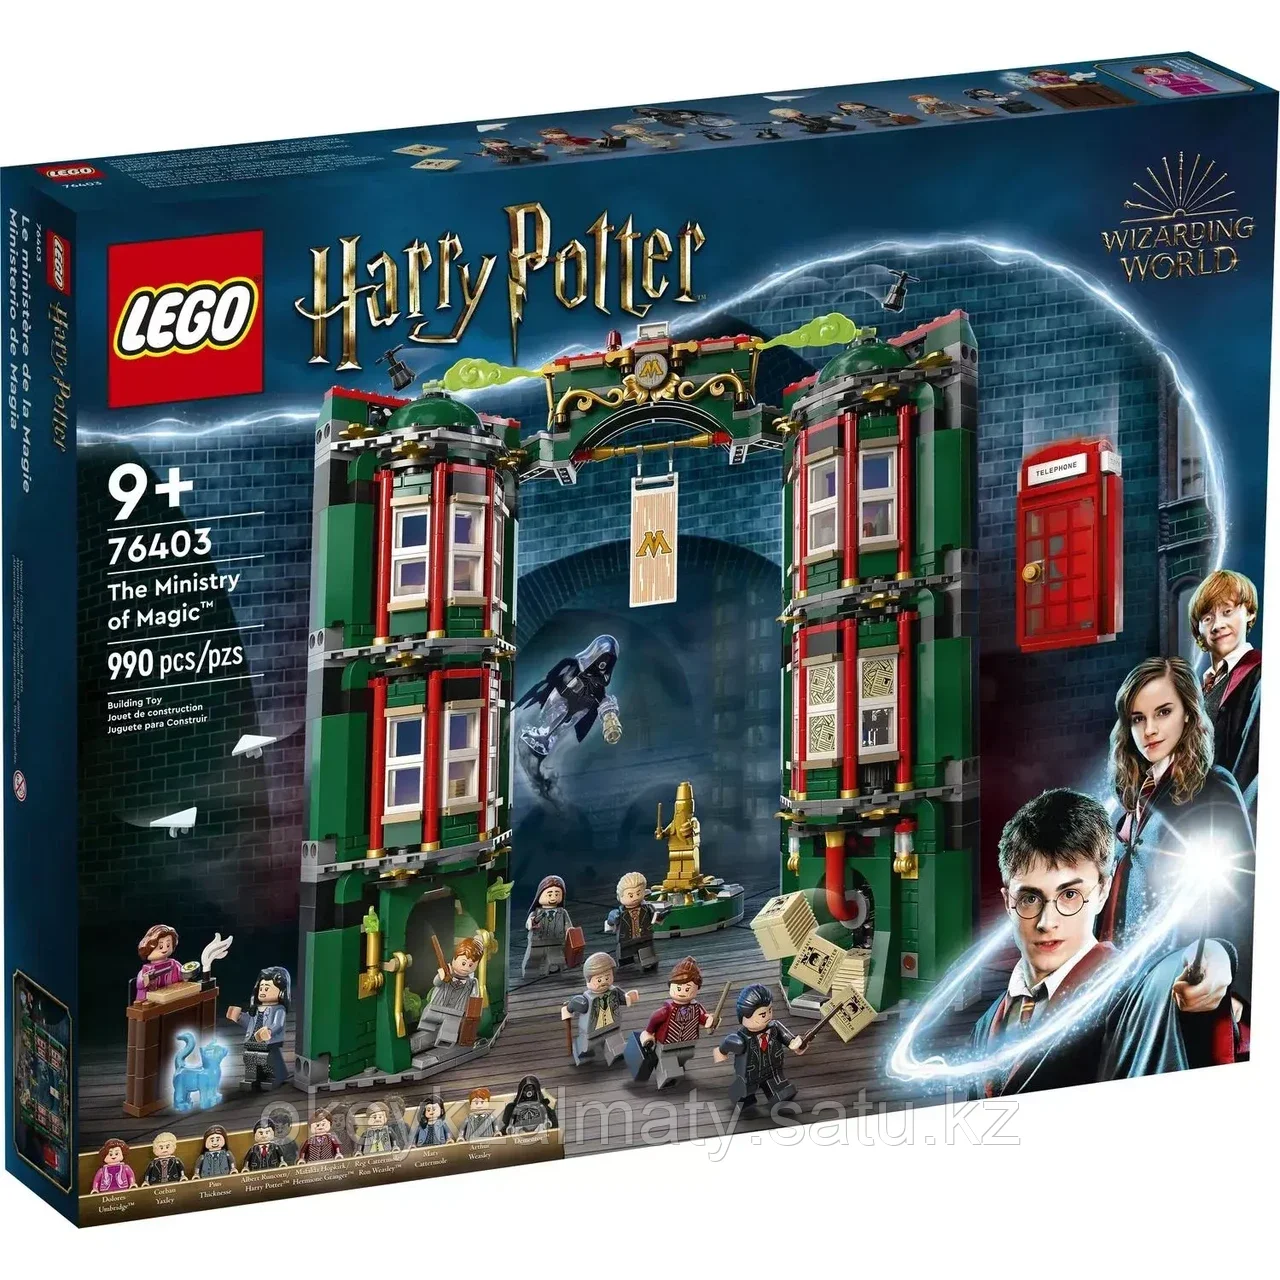 LEGO: Министерство магии Harry Potter 76403